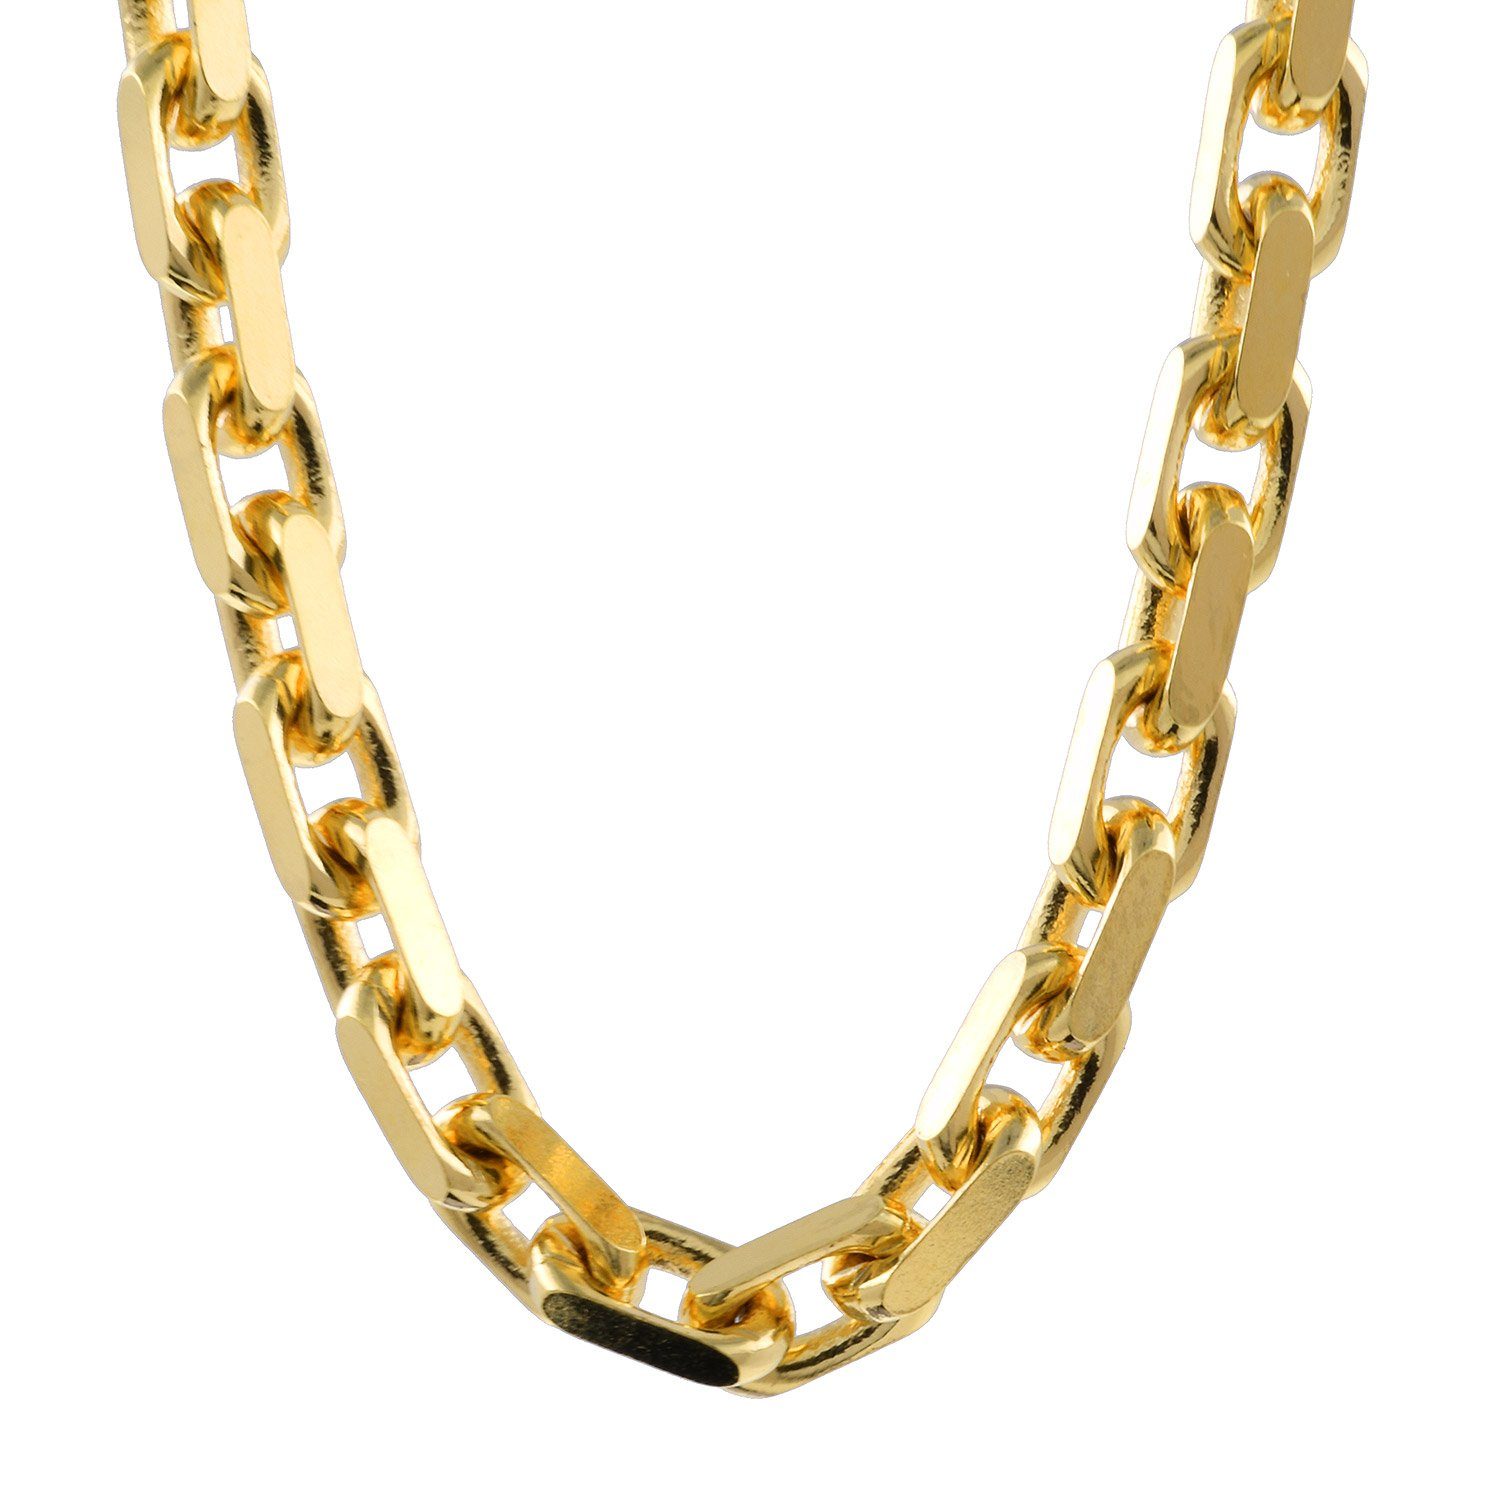 HOPLO Goldkette Ankerkette diamantiert 585 - 14 Karat Gold 3,0 mm  Kettenlänge 50 cm, Made in Germany